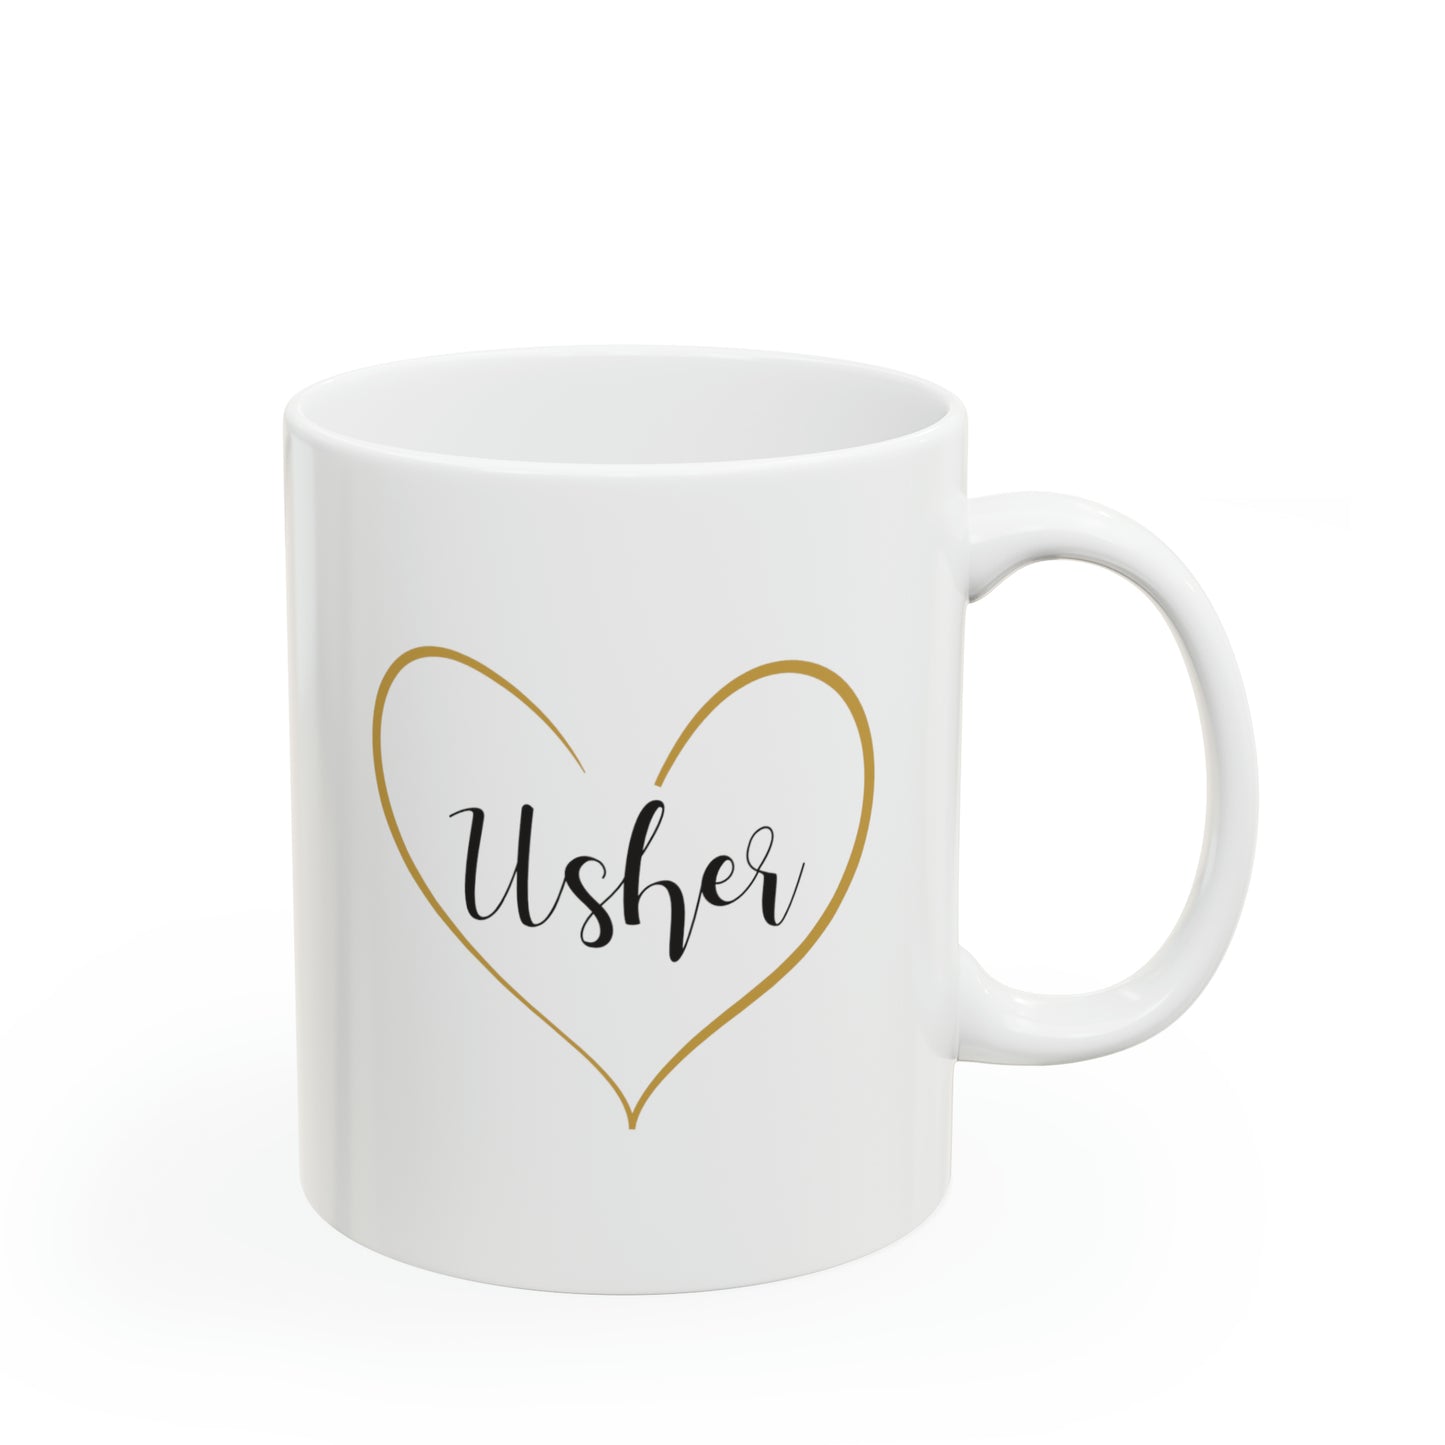 Usher Coffee Mug - Double Sided 11oz White Ceramic by TheGlassyLass.com